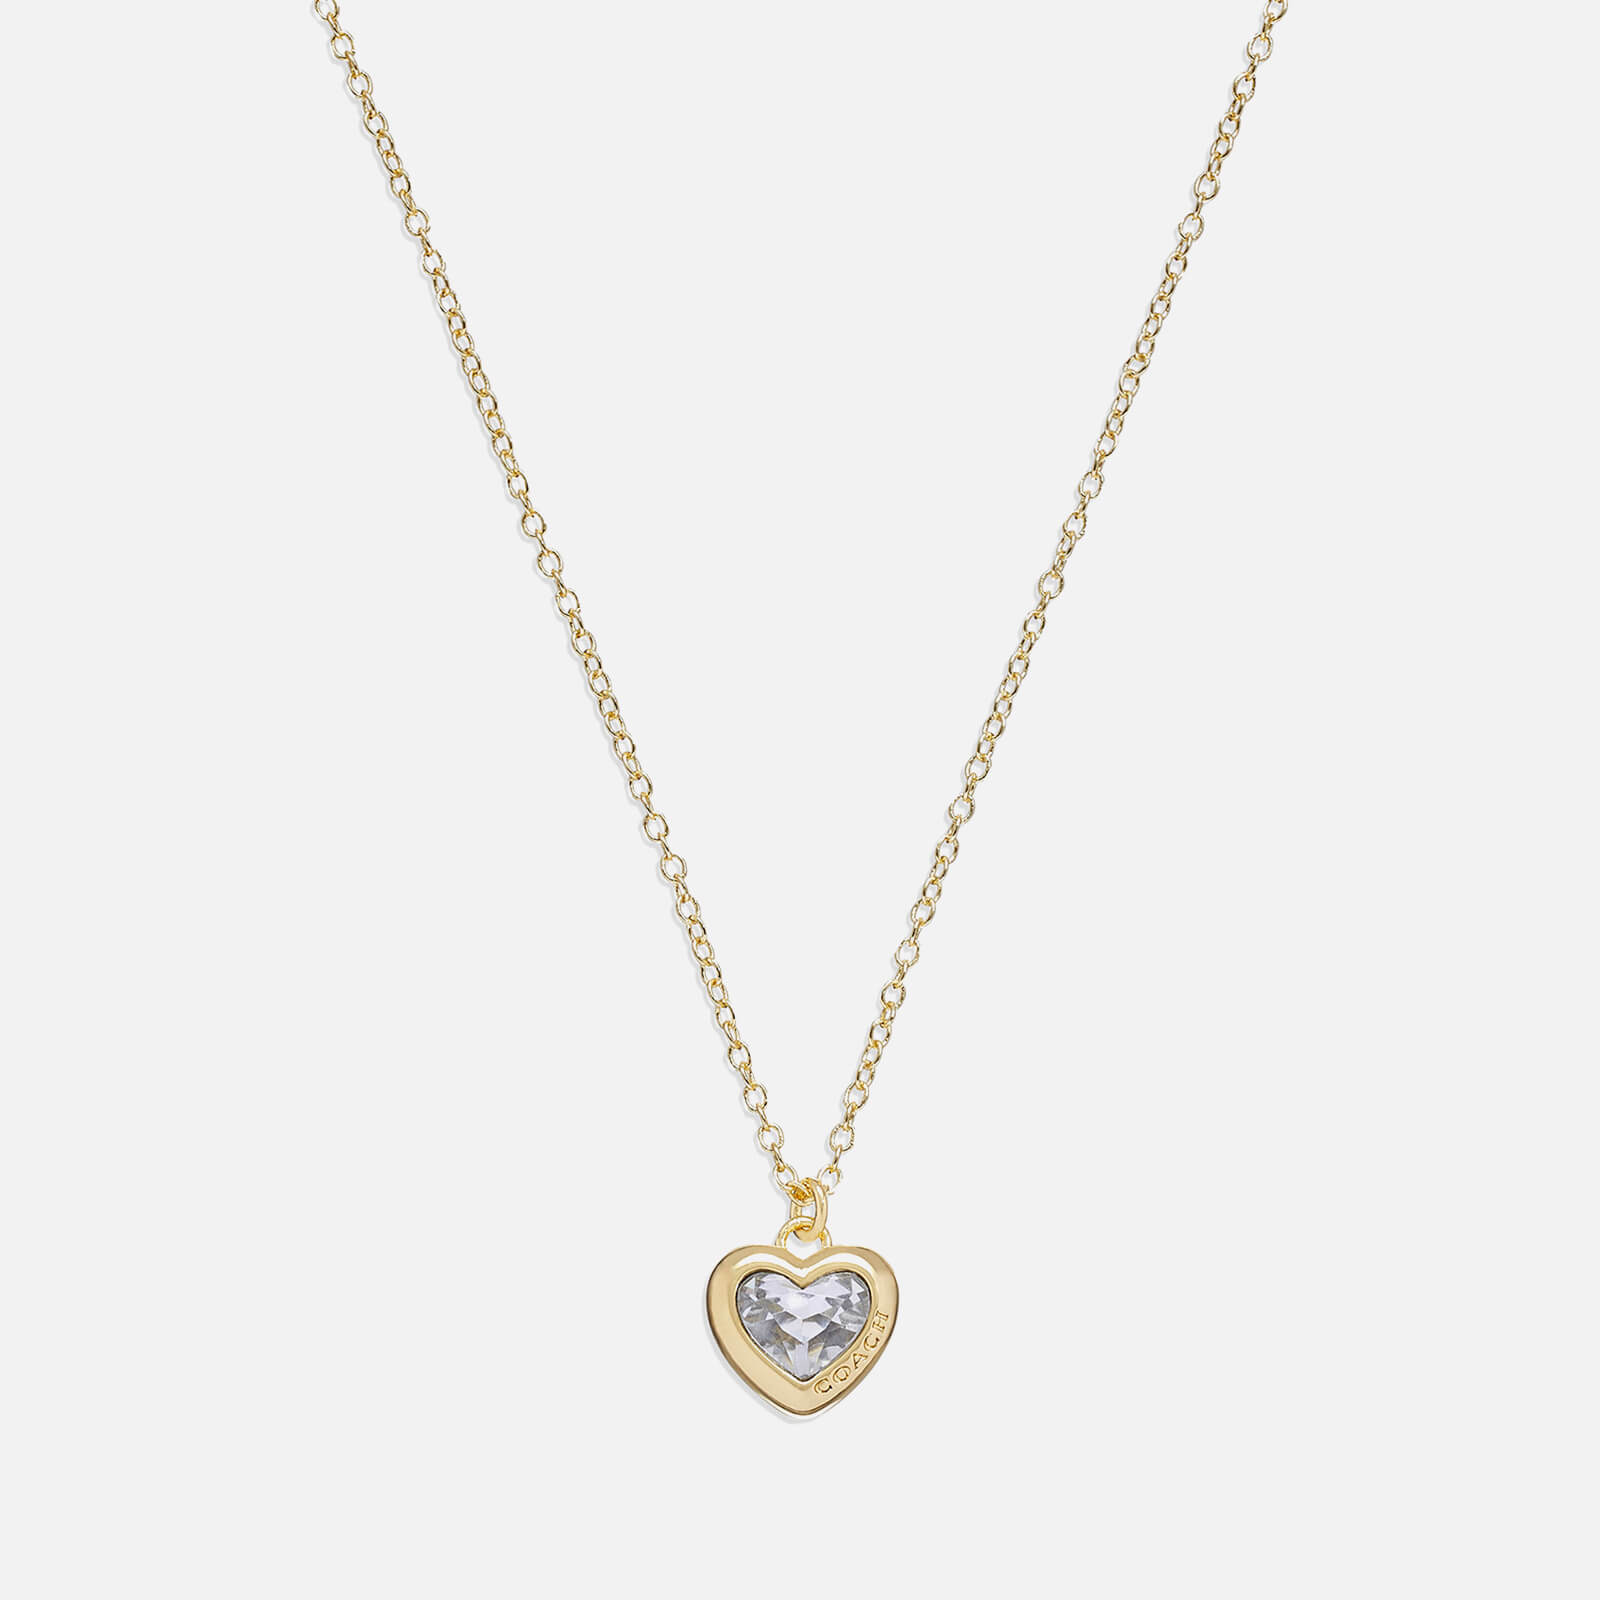 Coach Heart Gold-Tone Pendant Necklace